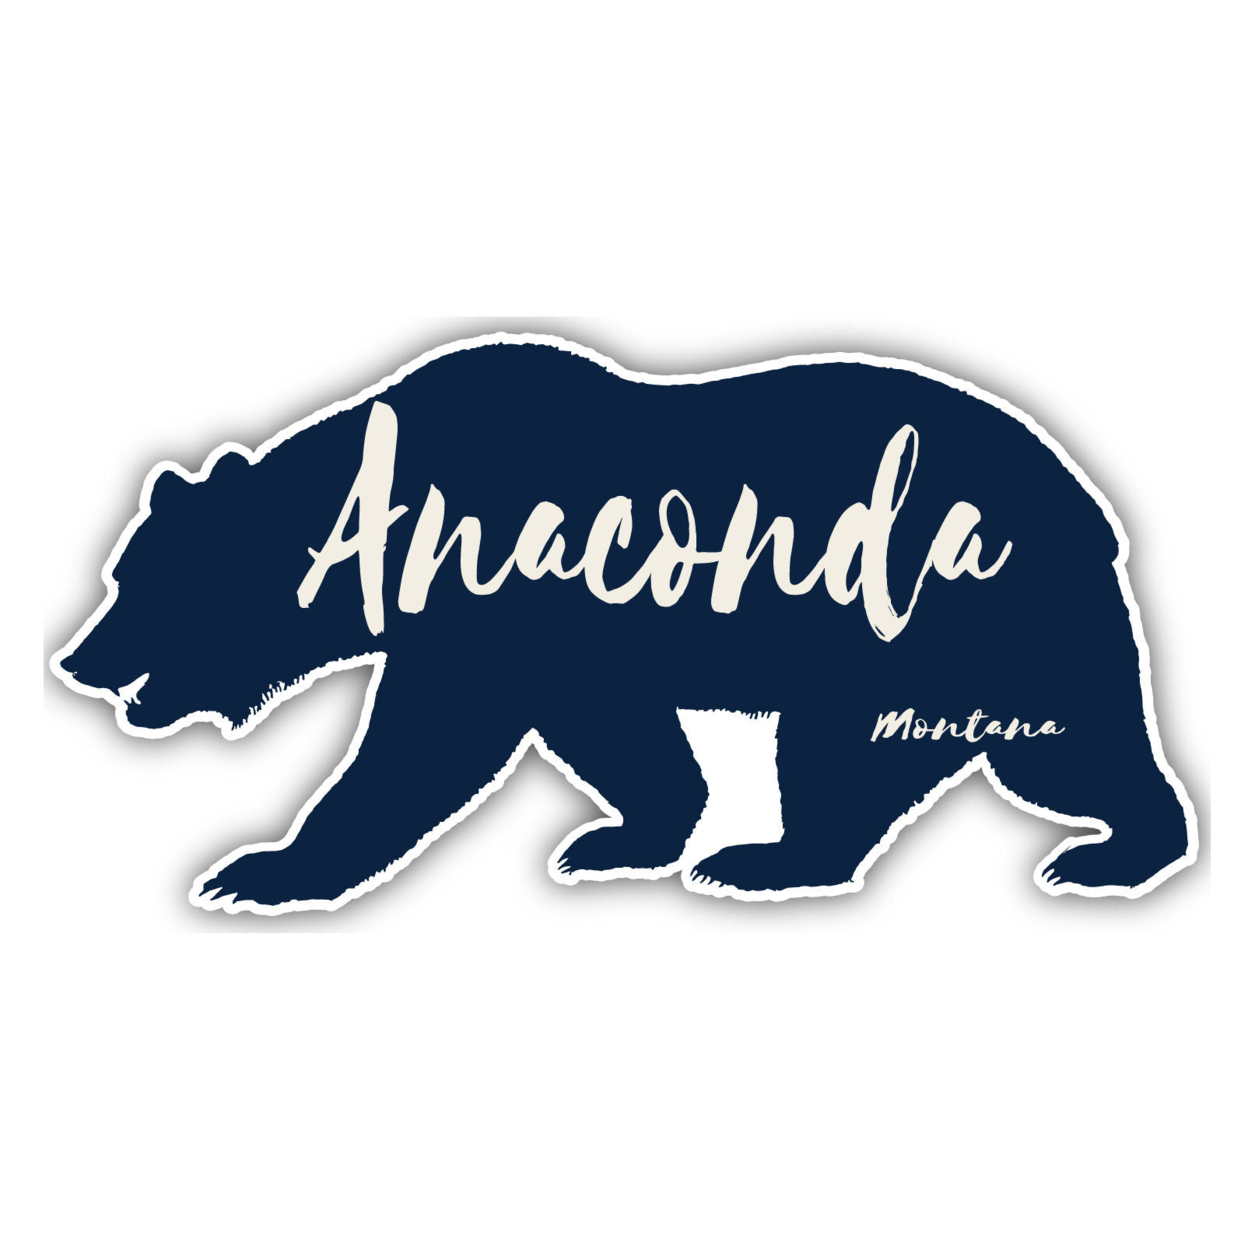 Anaconda Montana Souvenir Decorative Stickers (Choose Theme And Size) - 4-Pack, 4-Inch, Bear